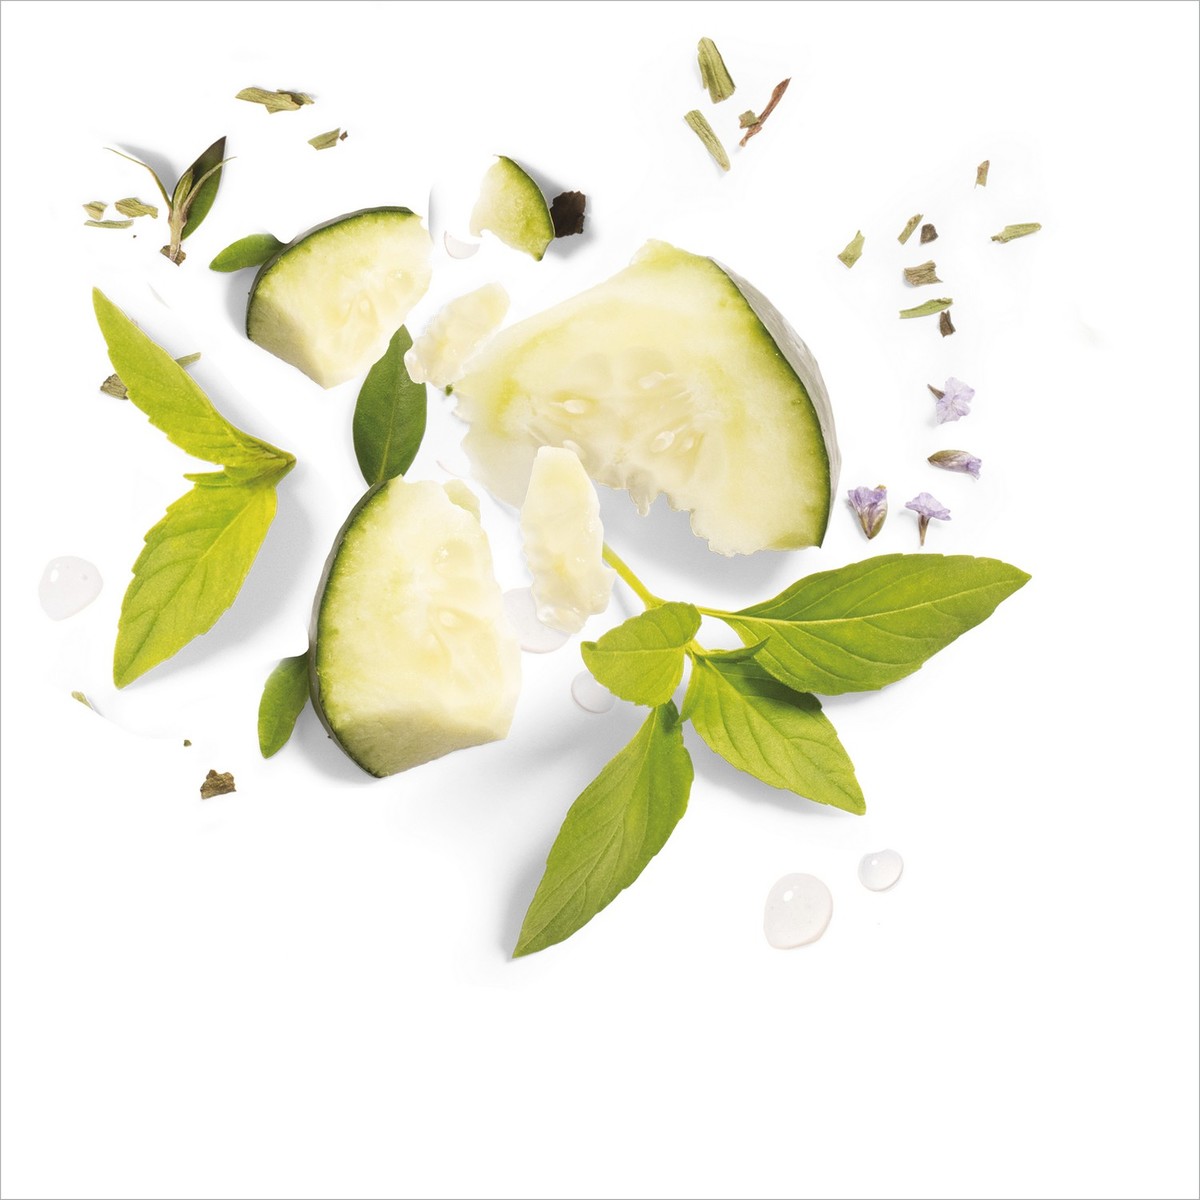 Herbal Essences Bio: Renew Shine Cucumber & Green Tea Shampoo 400 ml